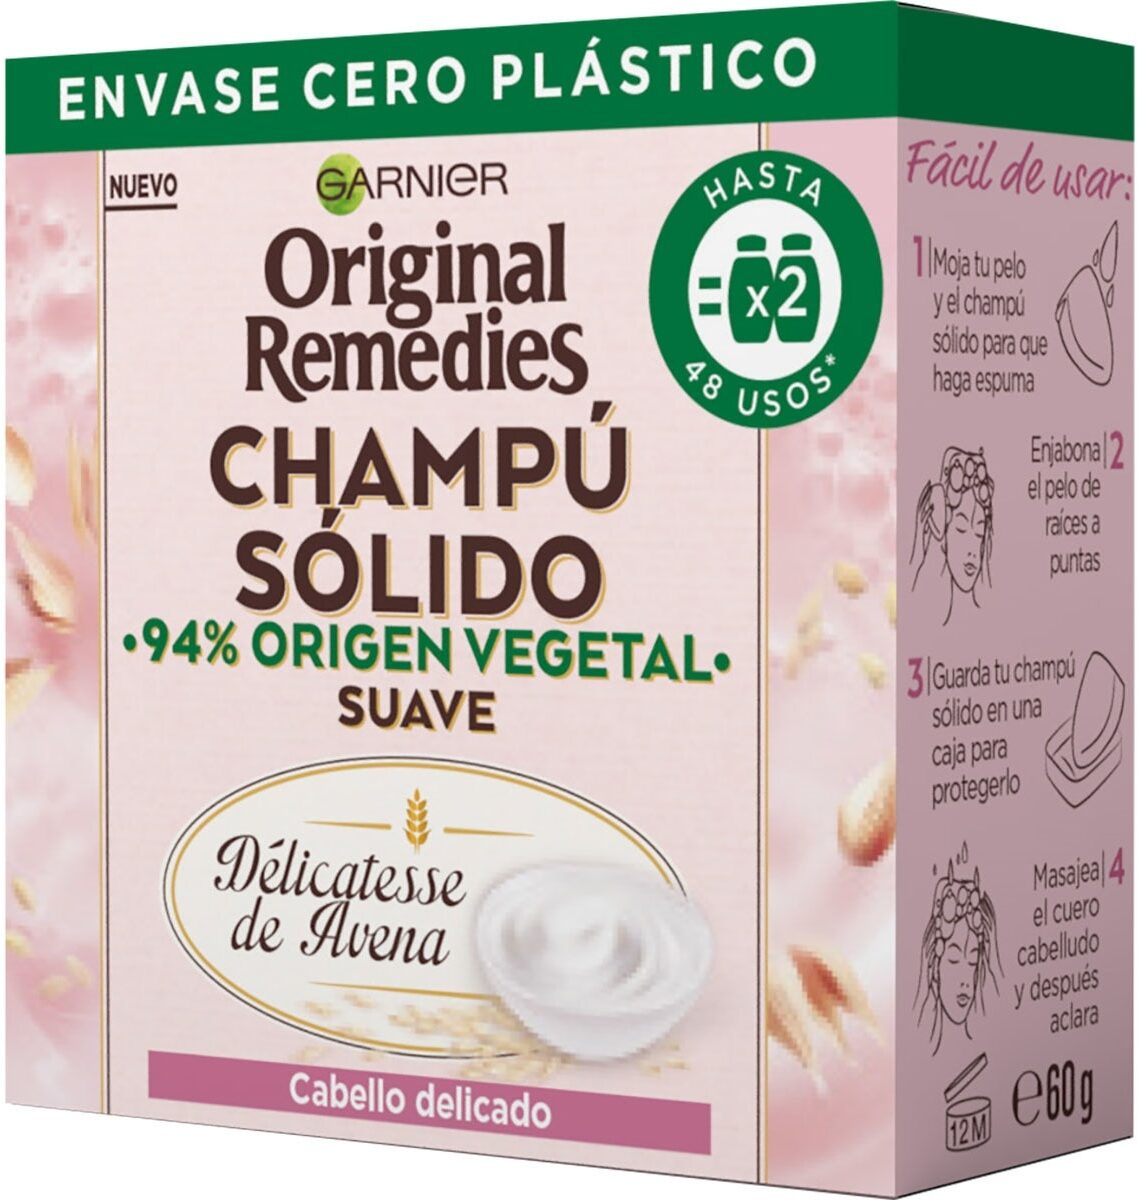 Original remedies champú solido avena - Produkt - en